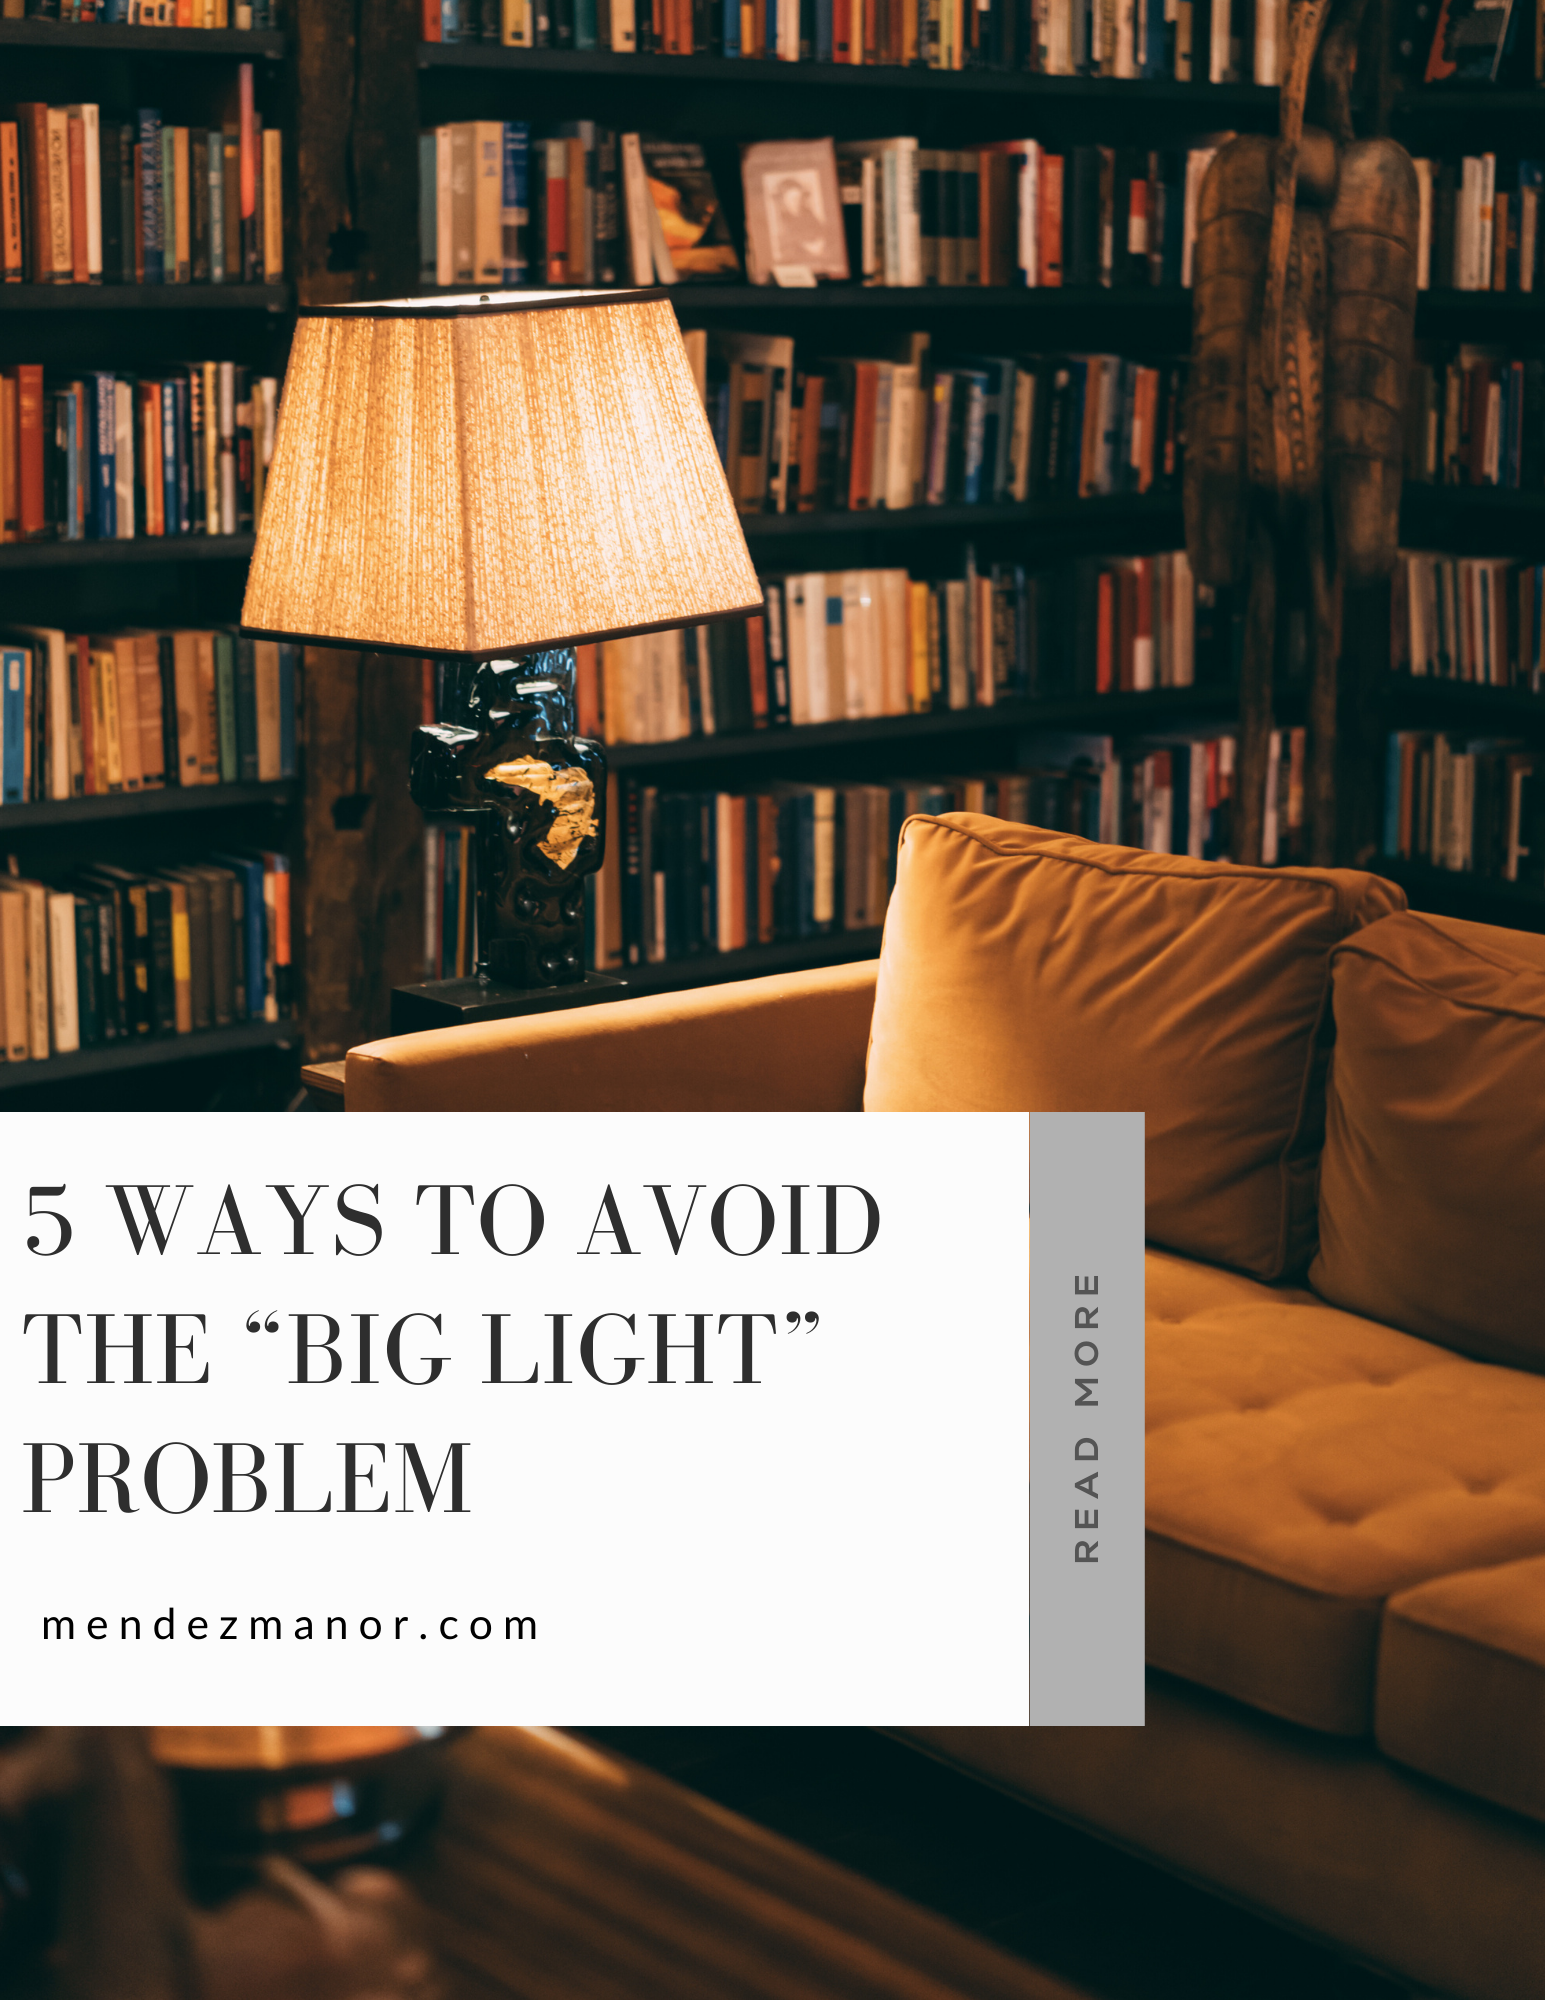 5 Ways to Avoid the "Big Light" Problem